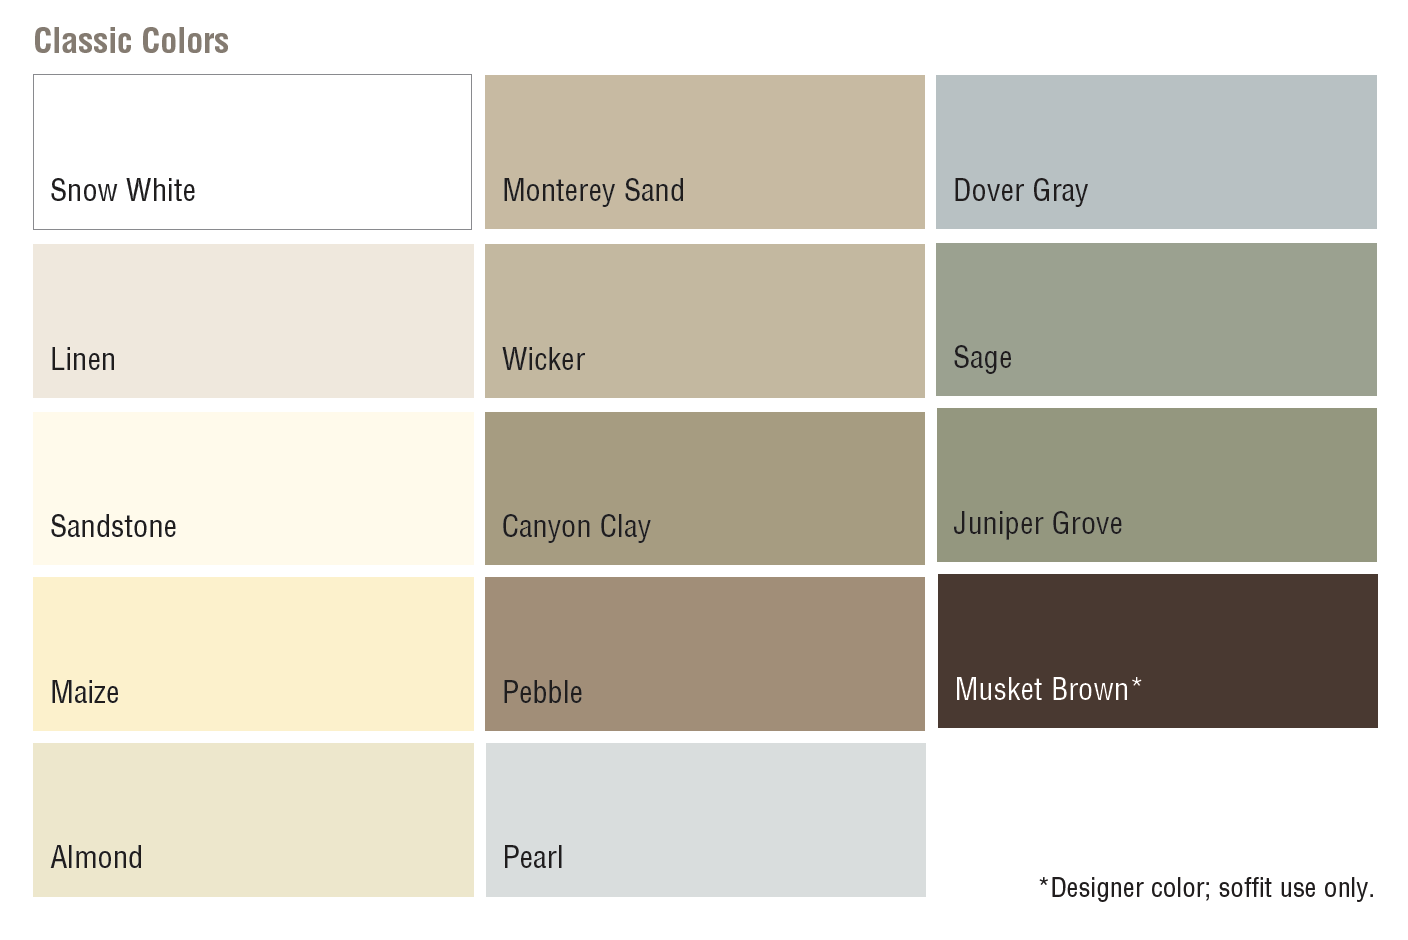 color-options